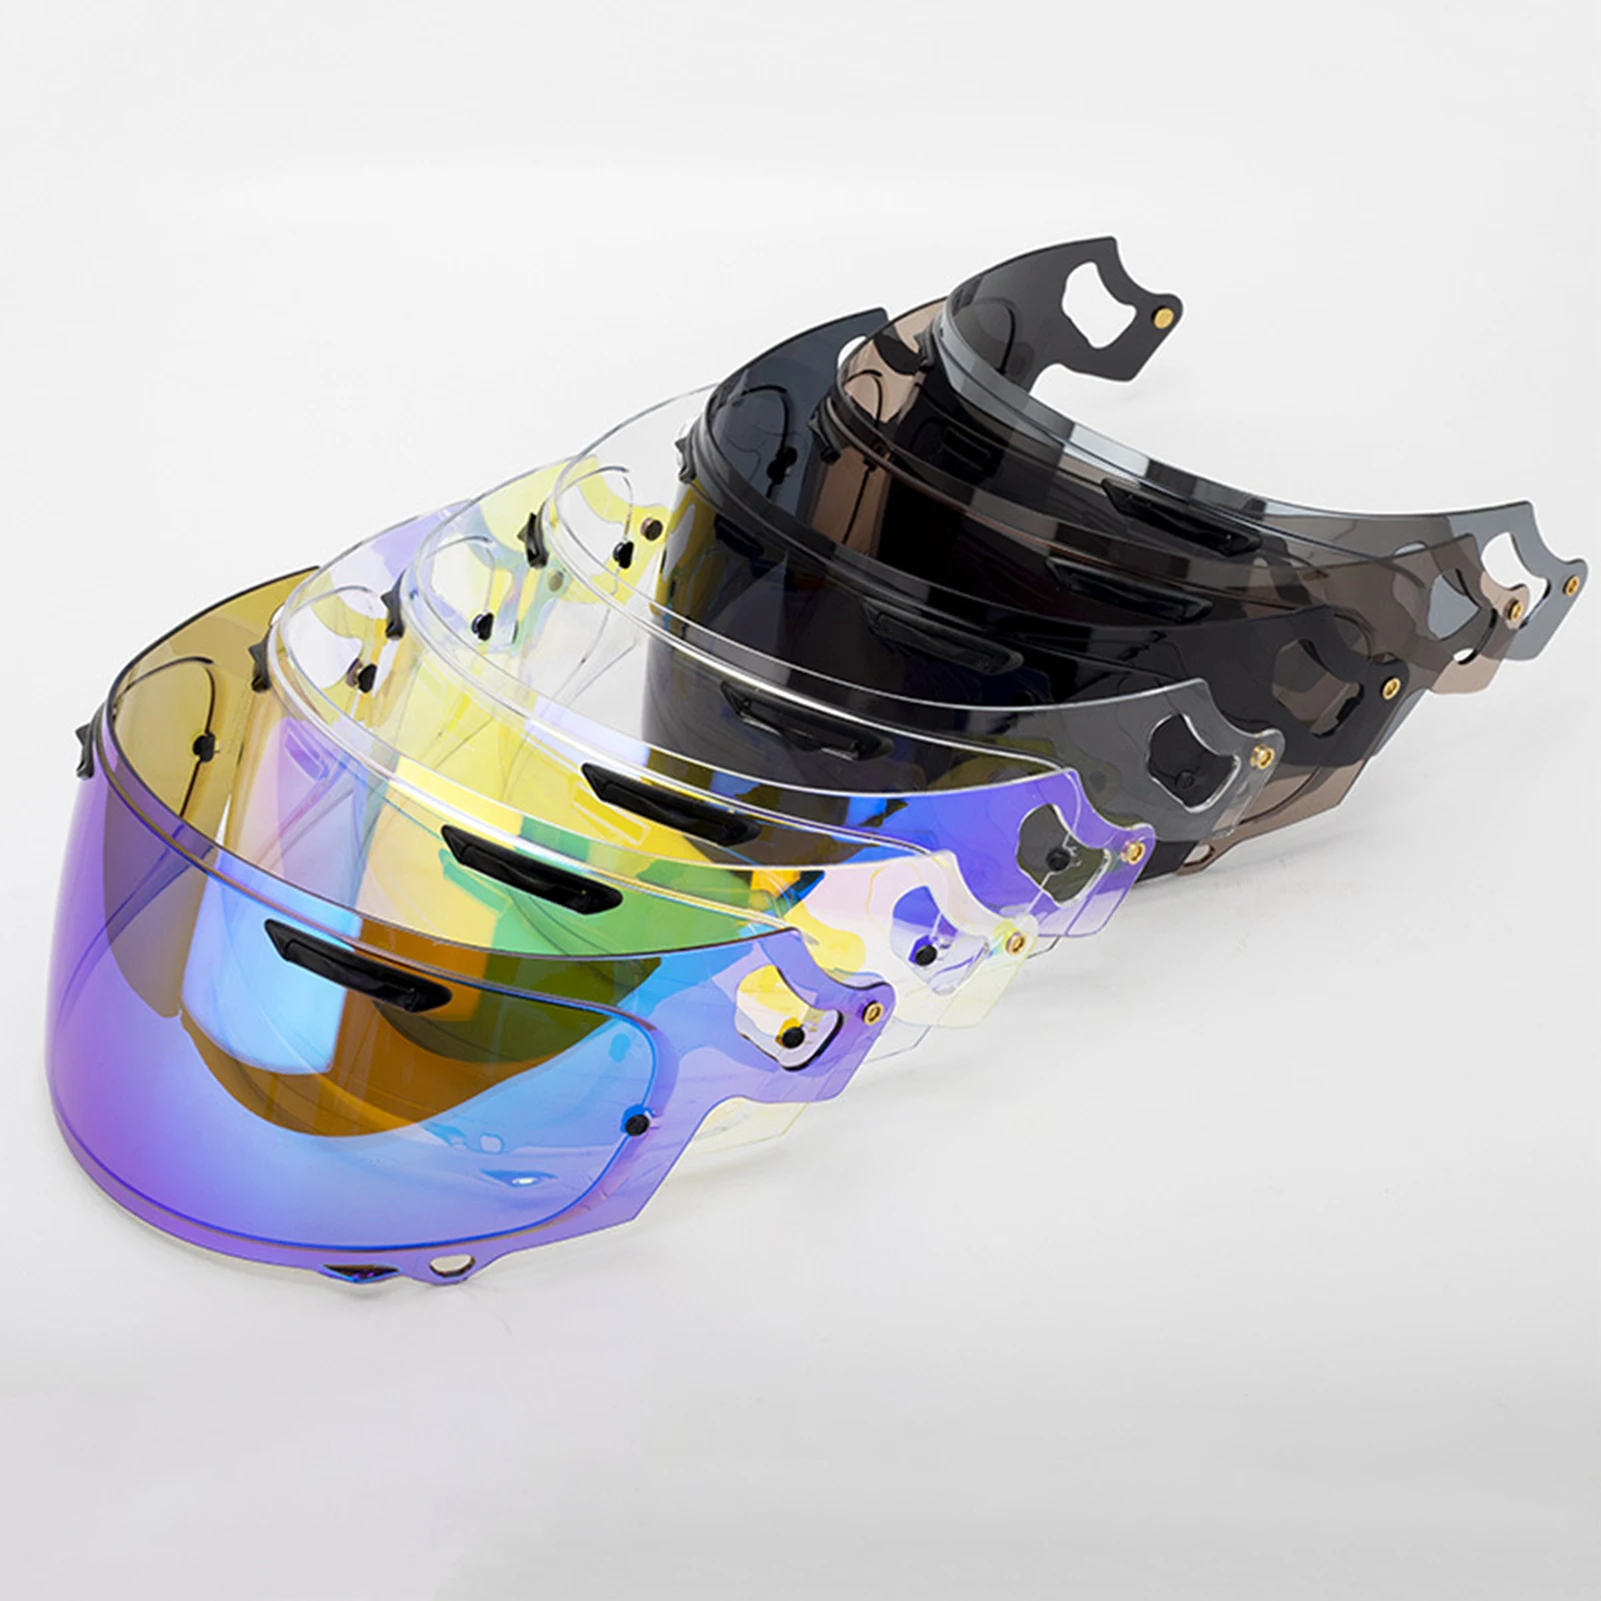 

Motorcycle Helmet Visors Replacement Mirrored Lens Shield For RX-7X REO XD RX-7V VA-SV,Anti-UV, Anti-Fog, Anti-Scratch Visors